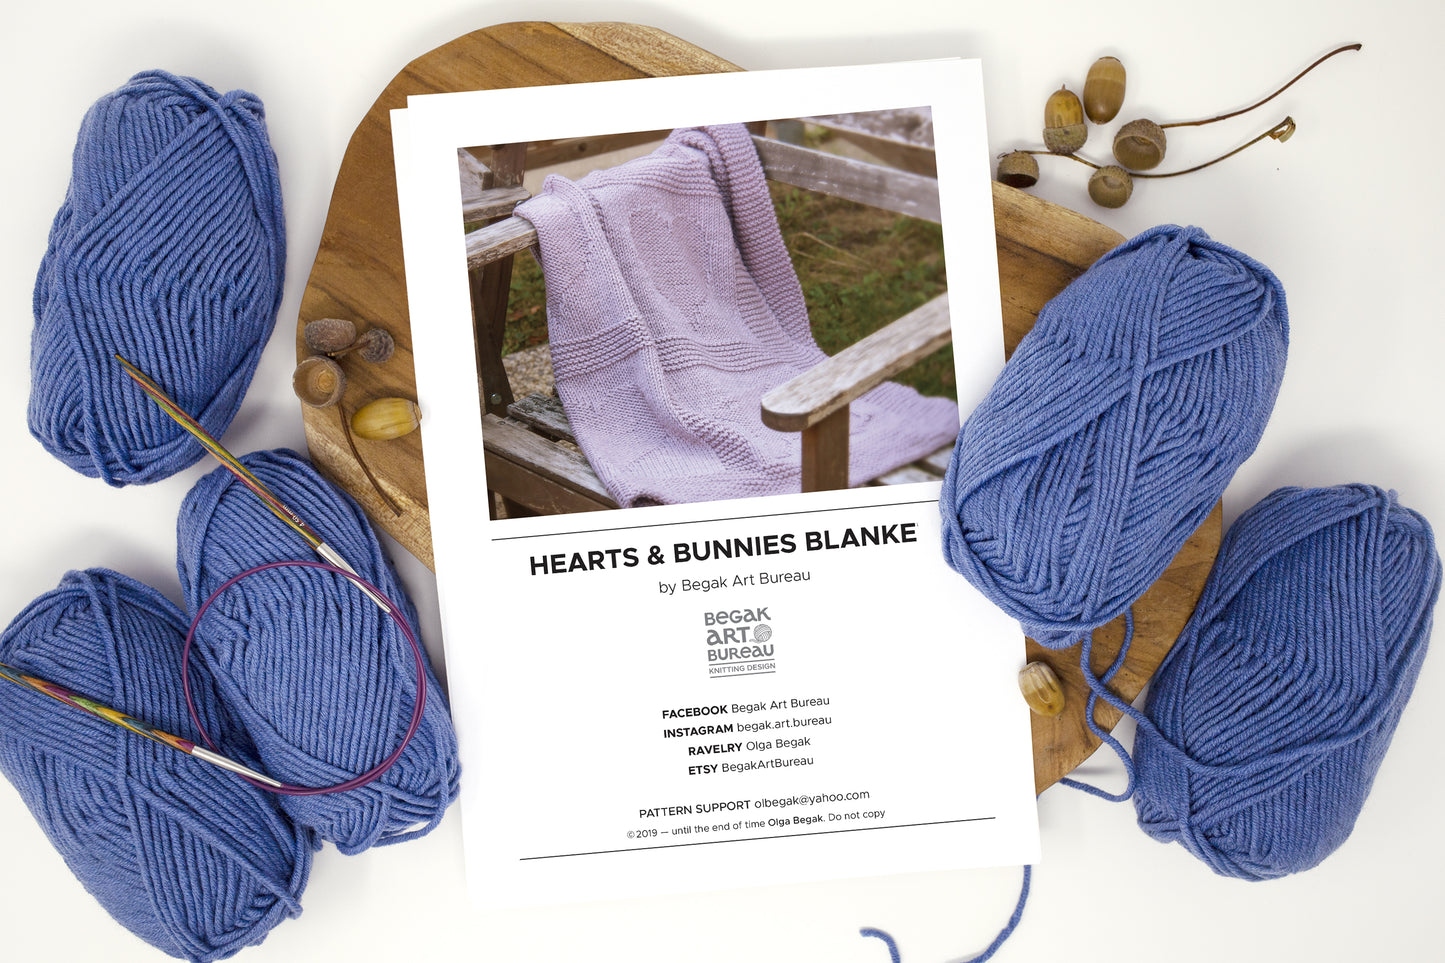 Hearts & Bunnies baby blanket knitting pattern with blue yarn balls